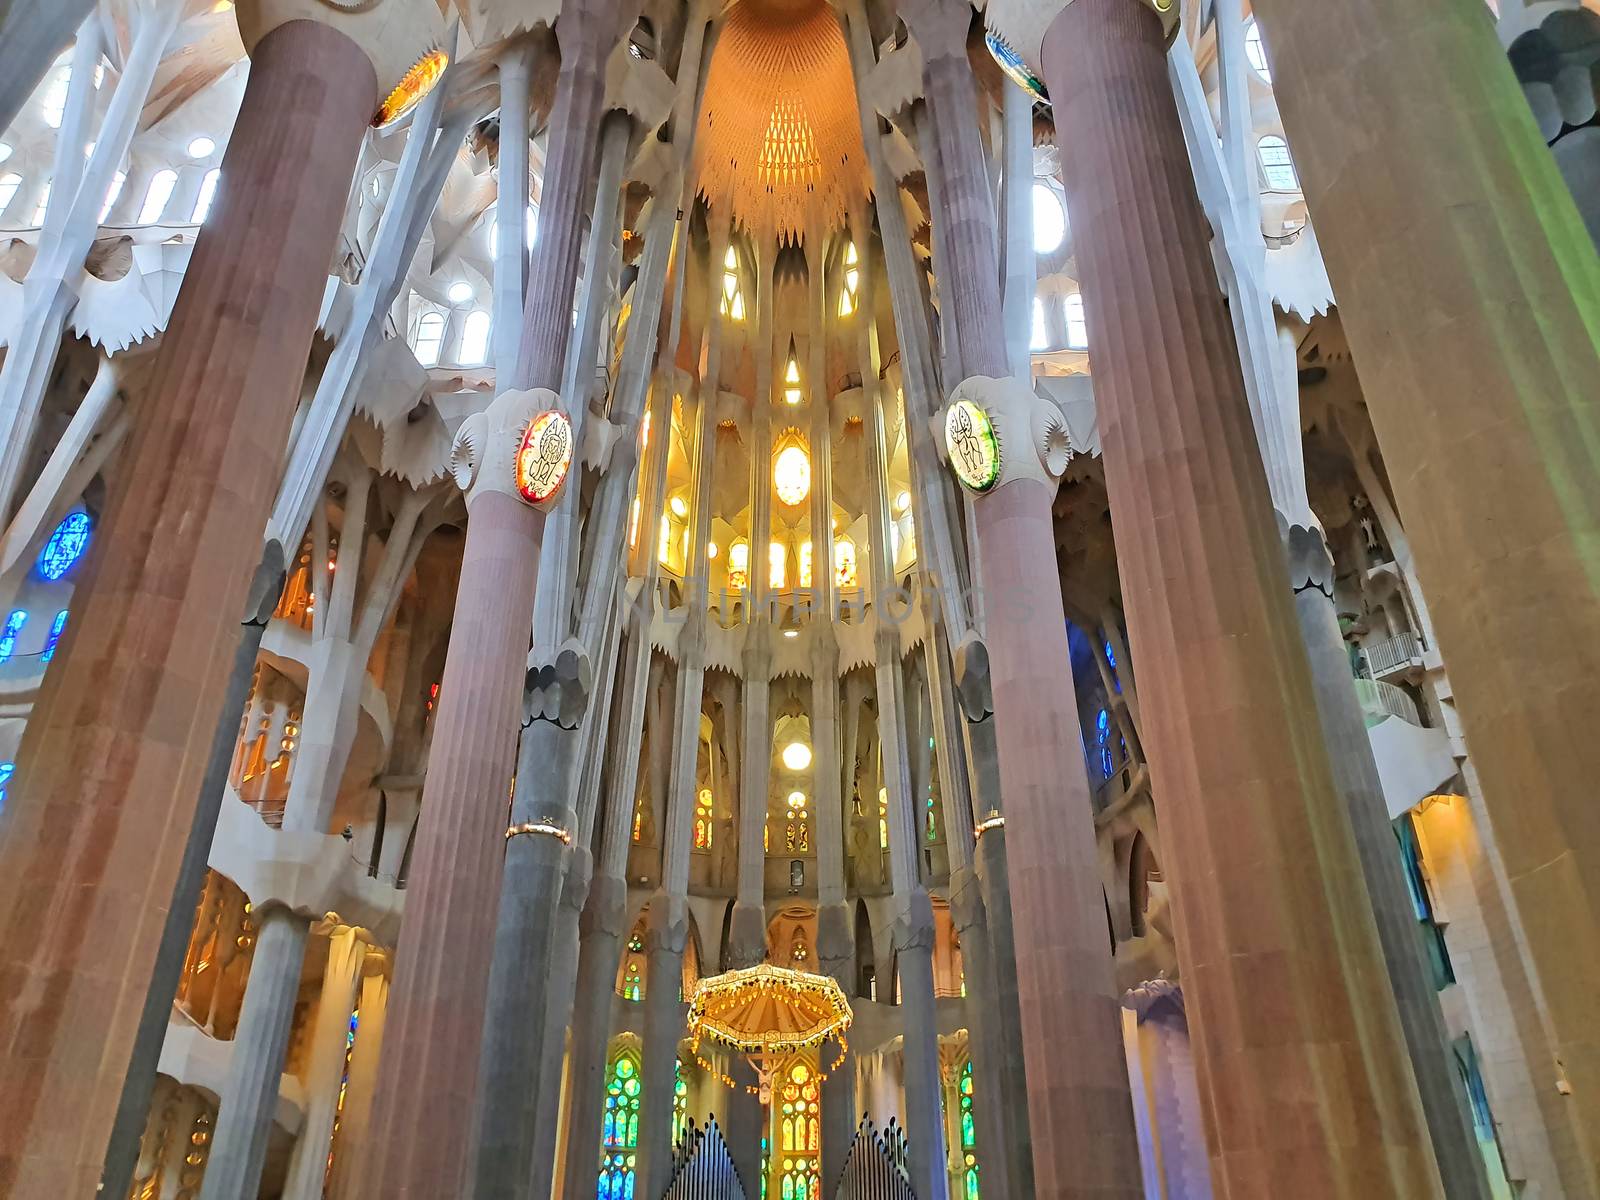 Sagrada Familia interior details by savcoco